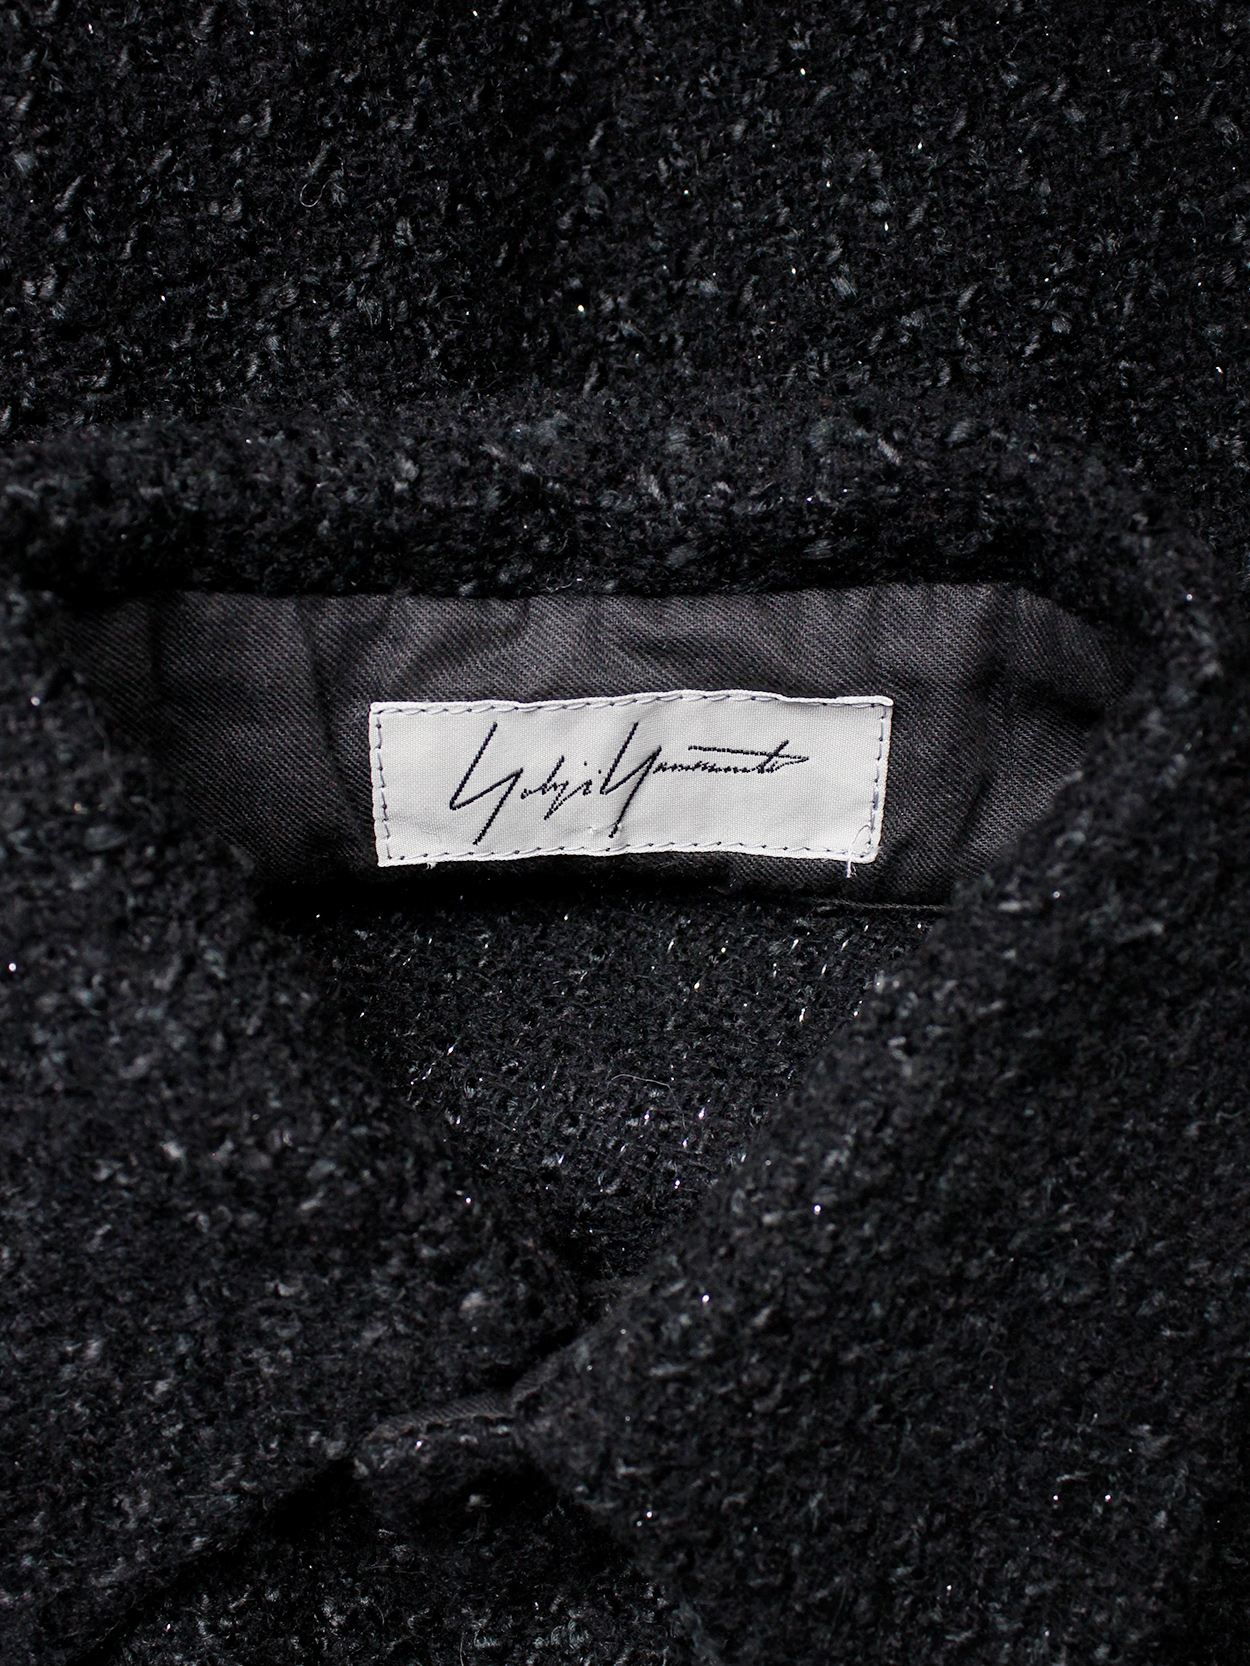 Yohji Yamamoto grey woven shirtdress with frayed panels - V A N II T A S